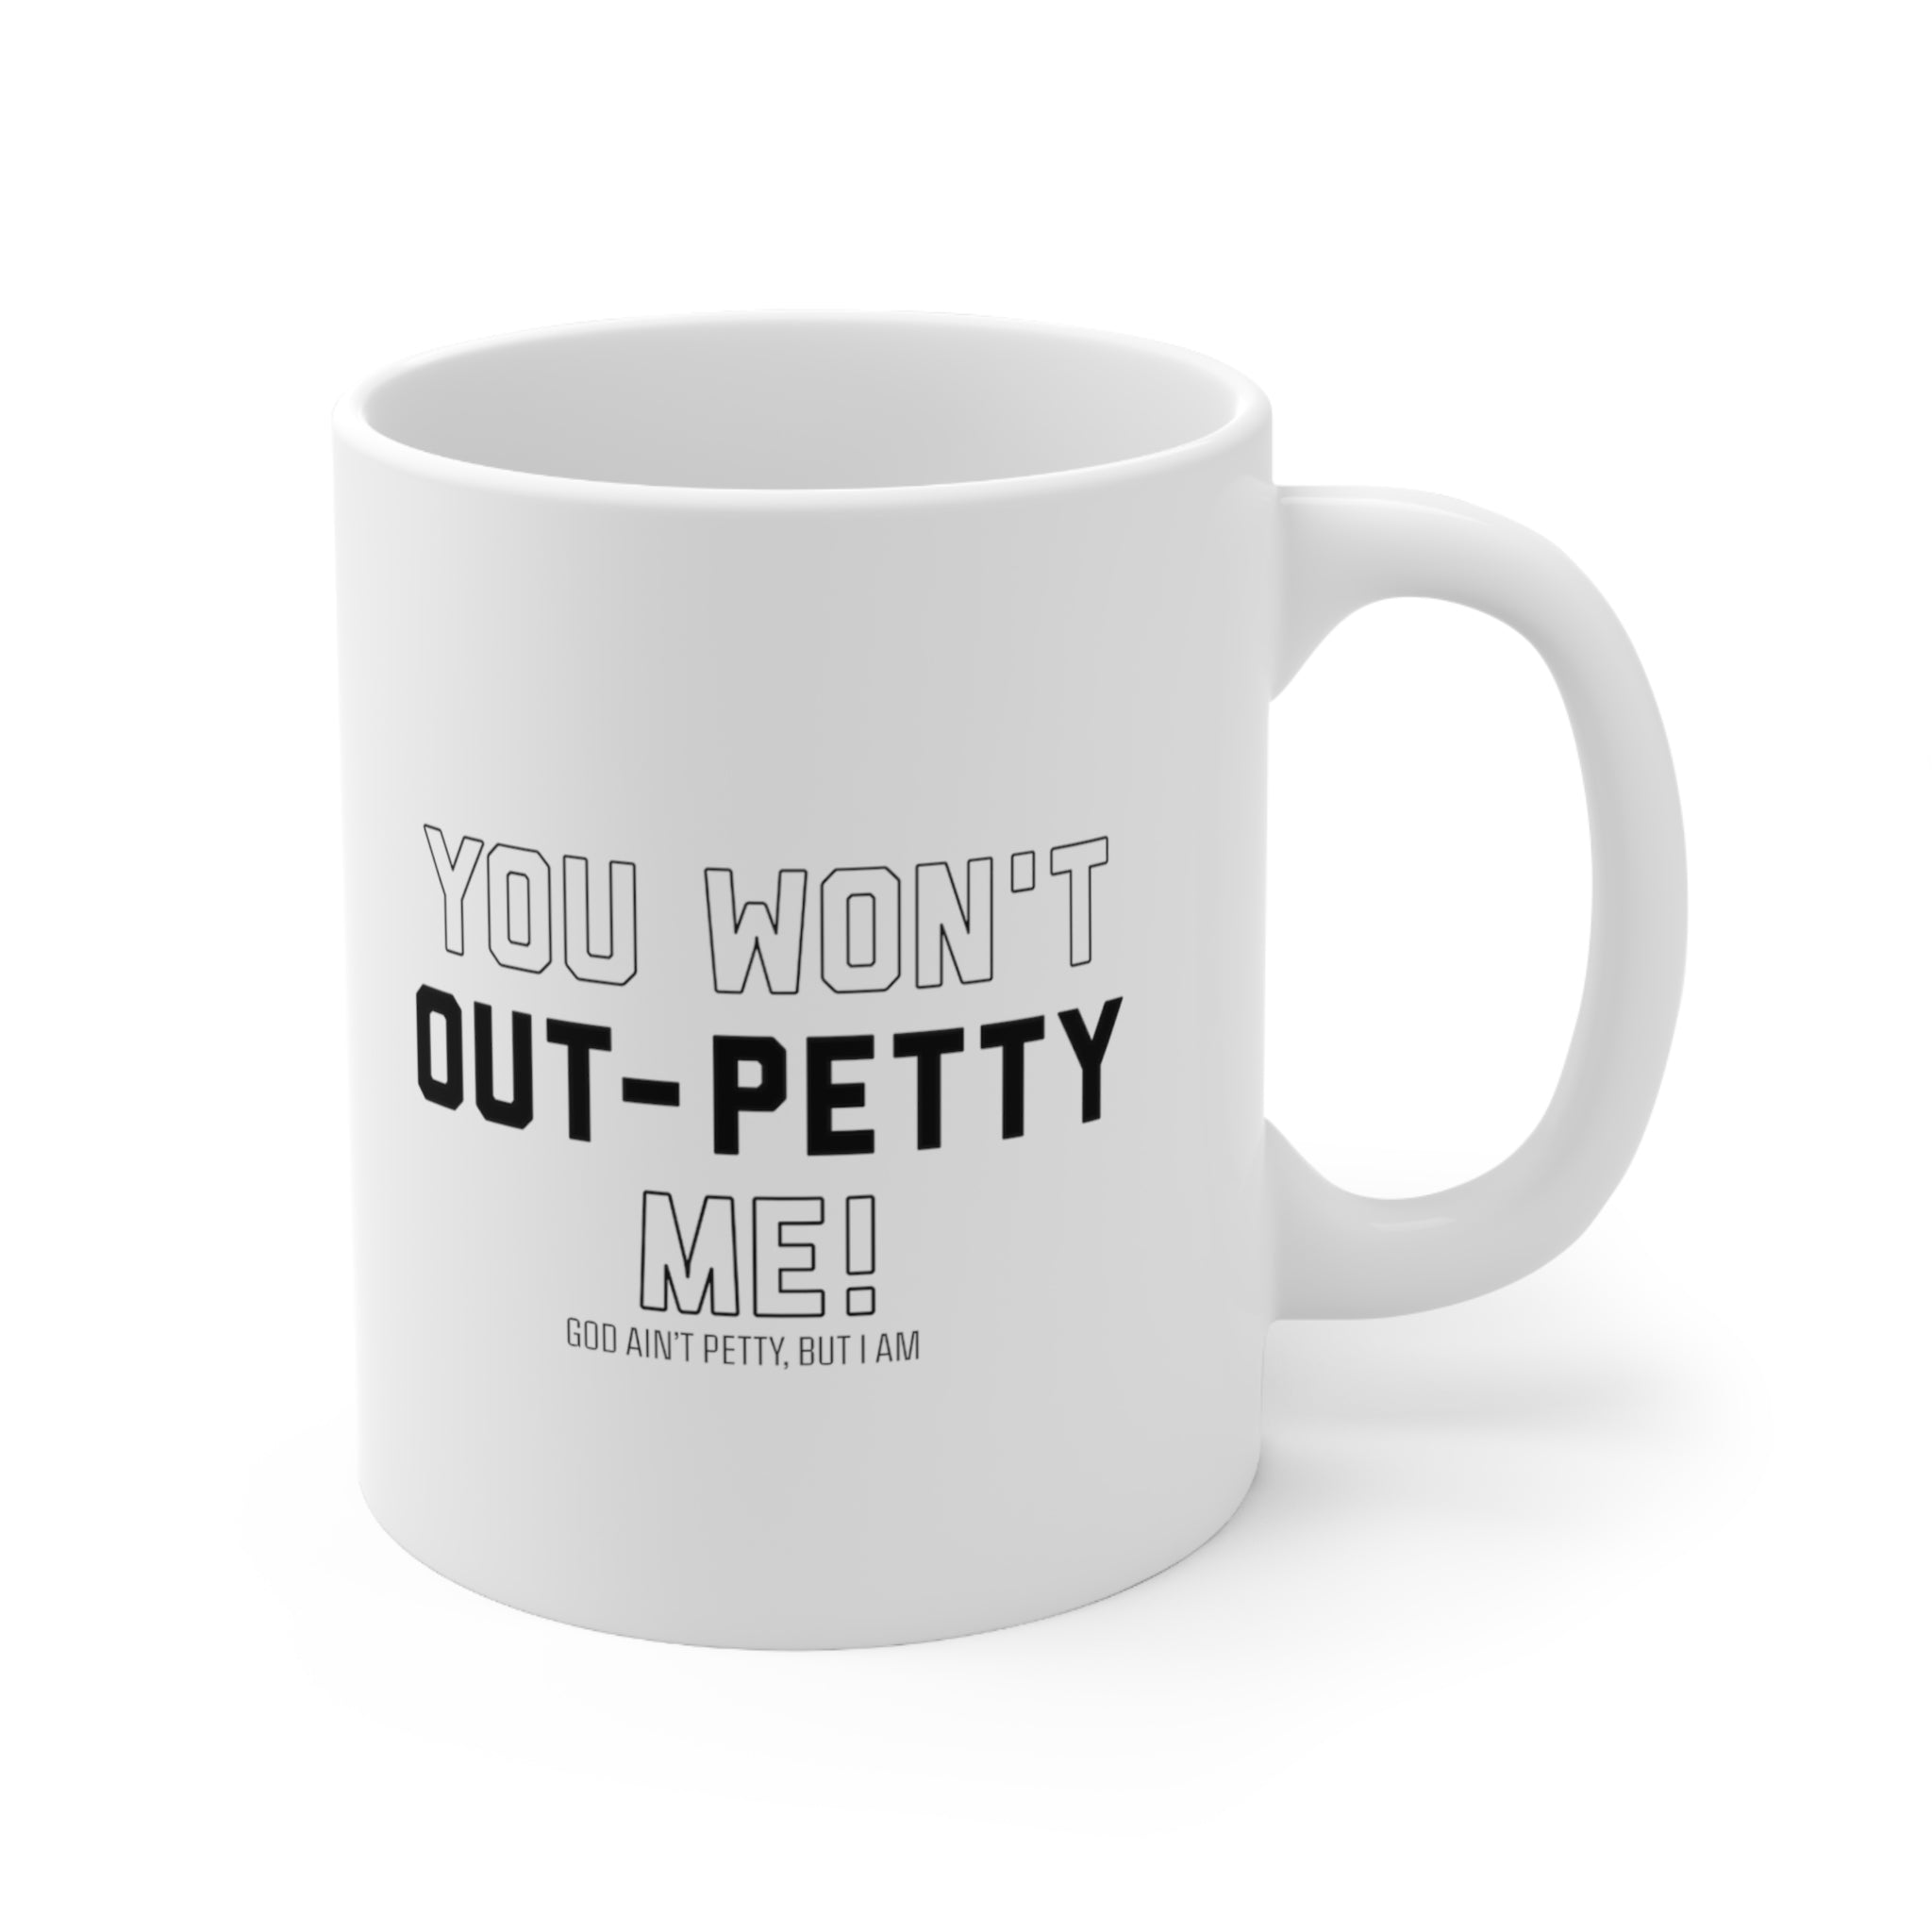 You won't out-petty me Mug 11oz (White/Black)-Mug-The Original God Ain't Petty But I Am